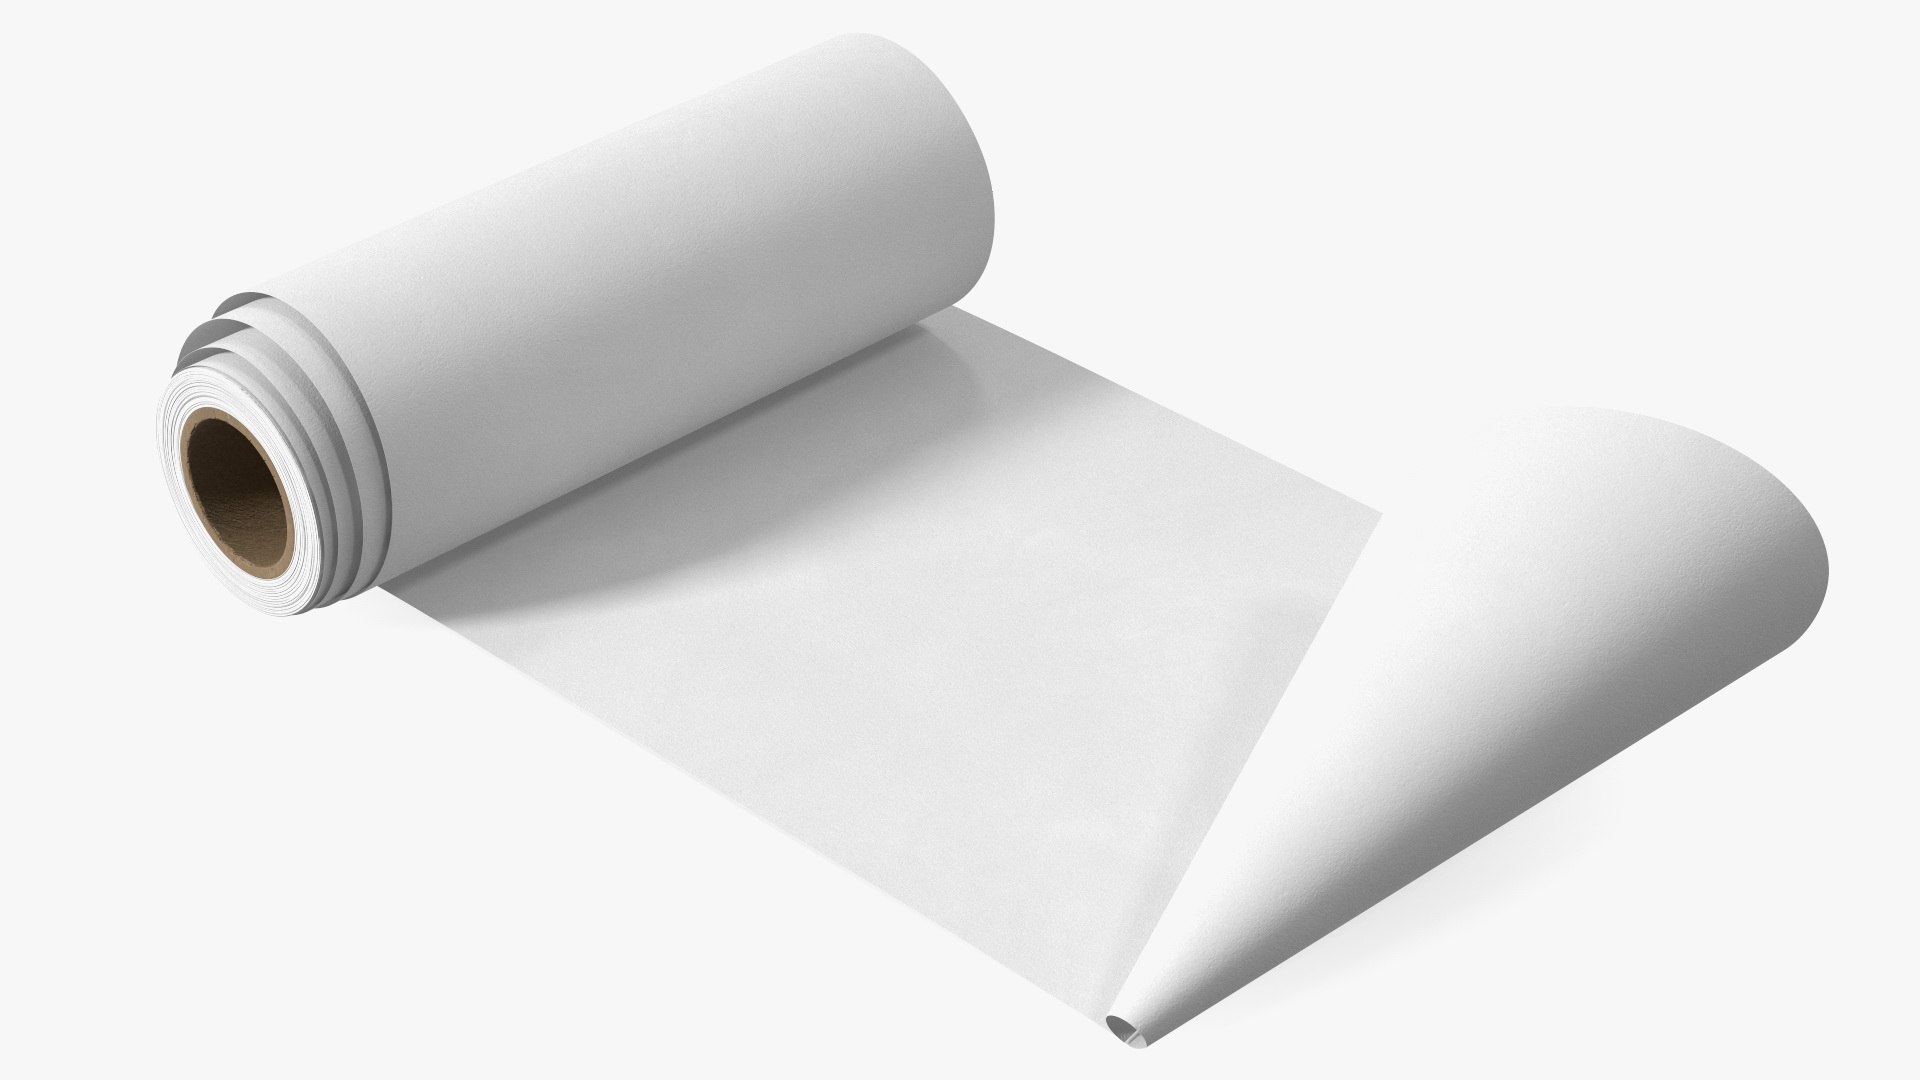 3D model Roll of White Paper Unfolded - TurboSquid 1874797